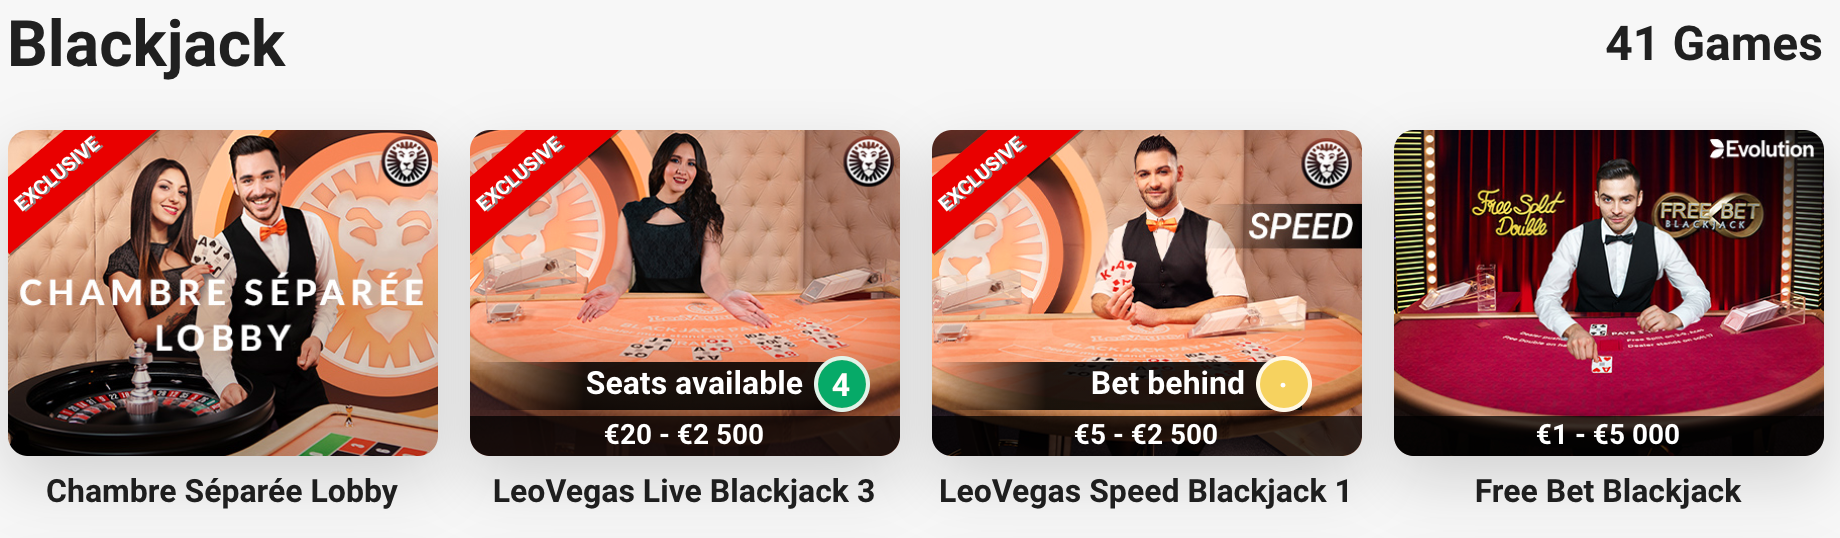 LeoVegas blackjack